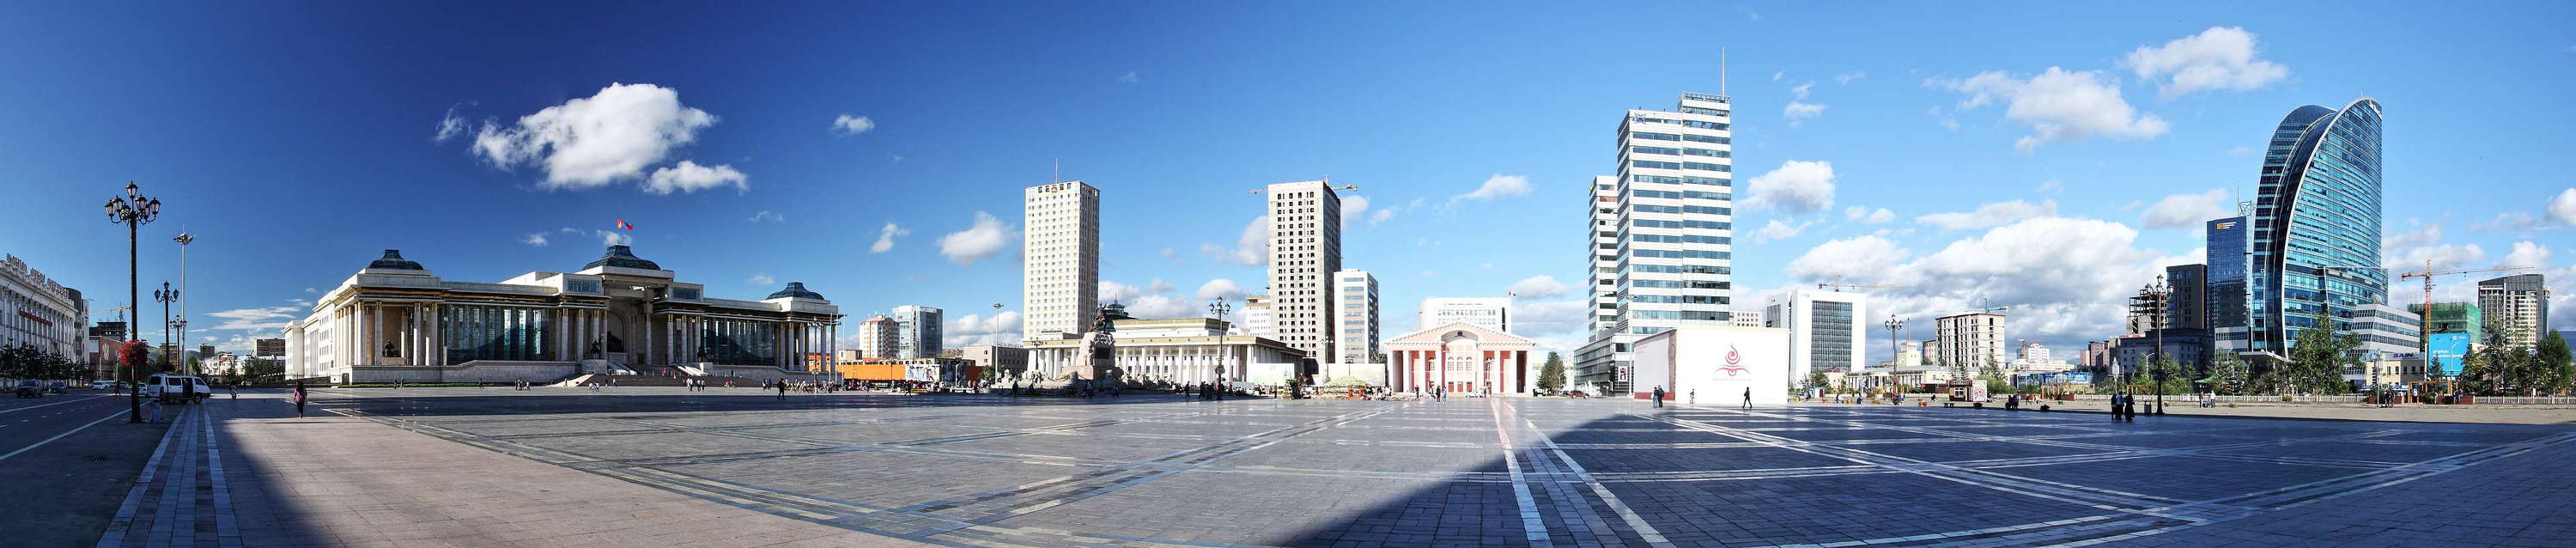 Ulaan Baatar  |  Panorama of Sükhbaatar Square